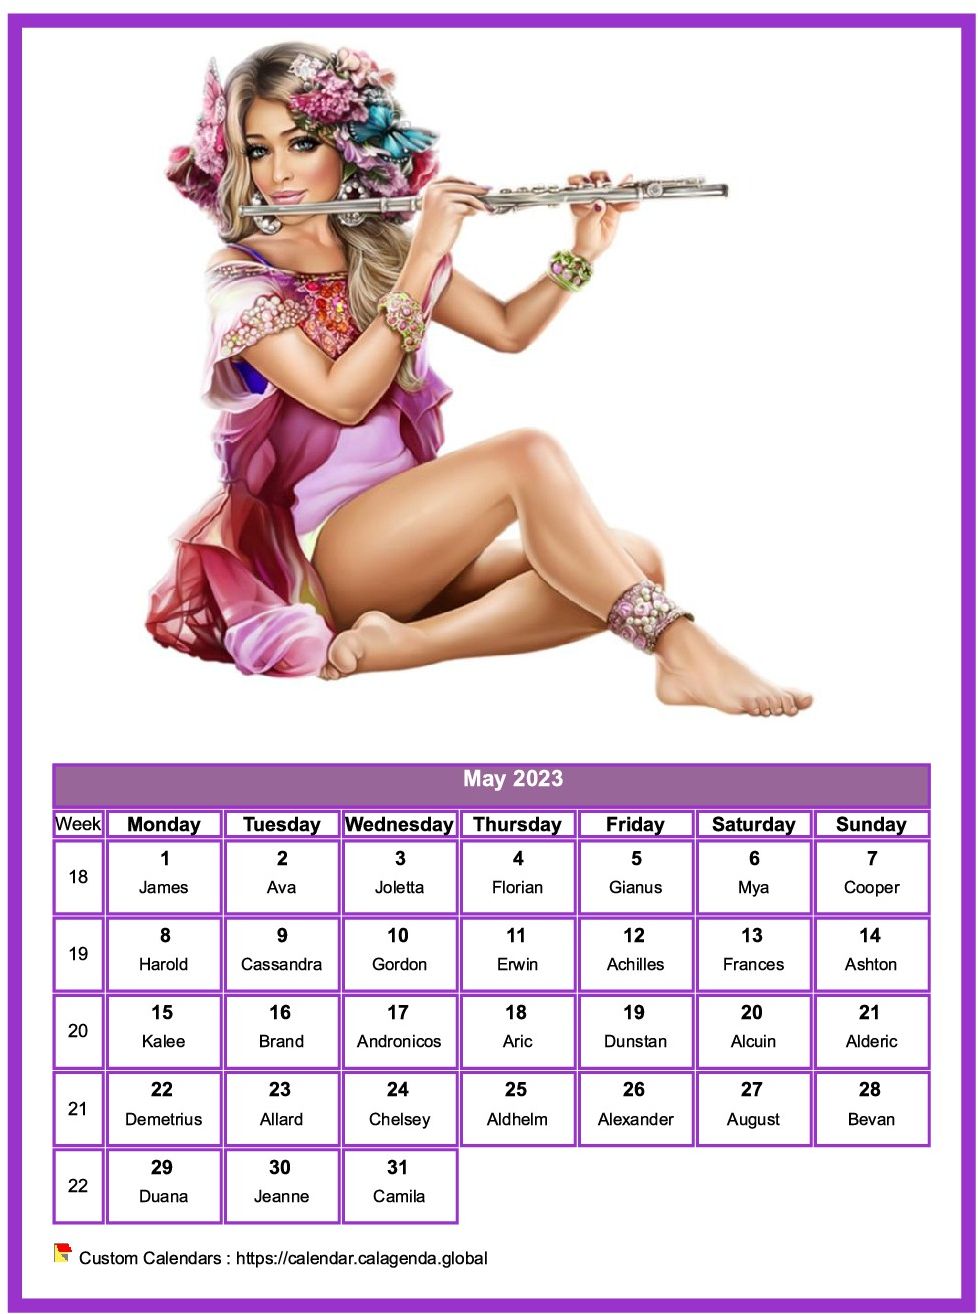 Calendar May 2023 women